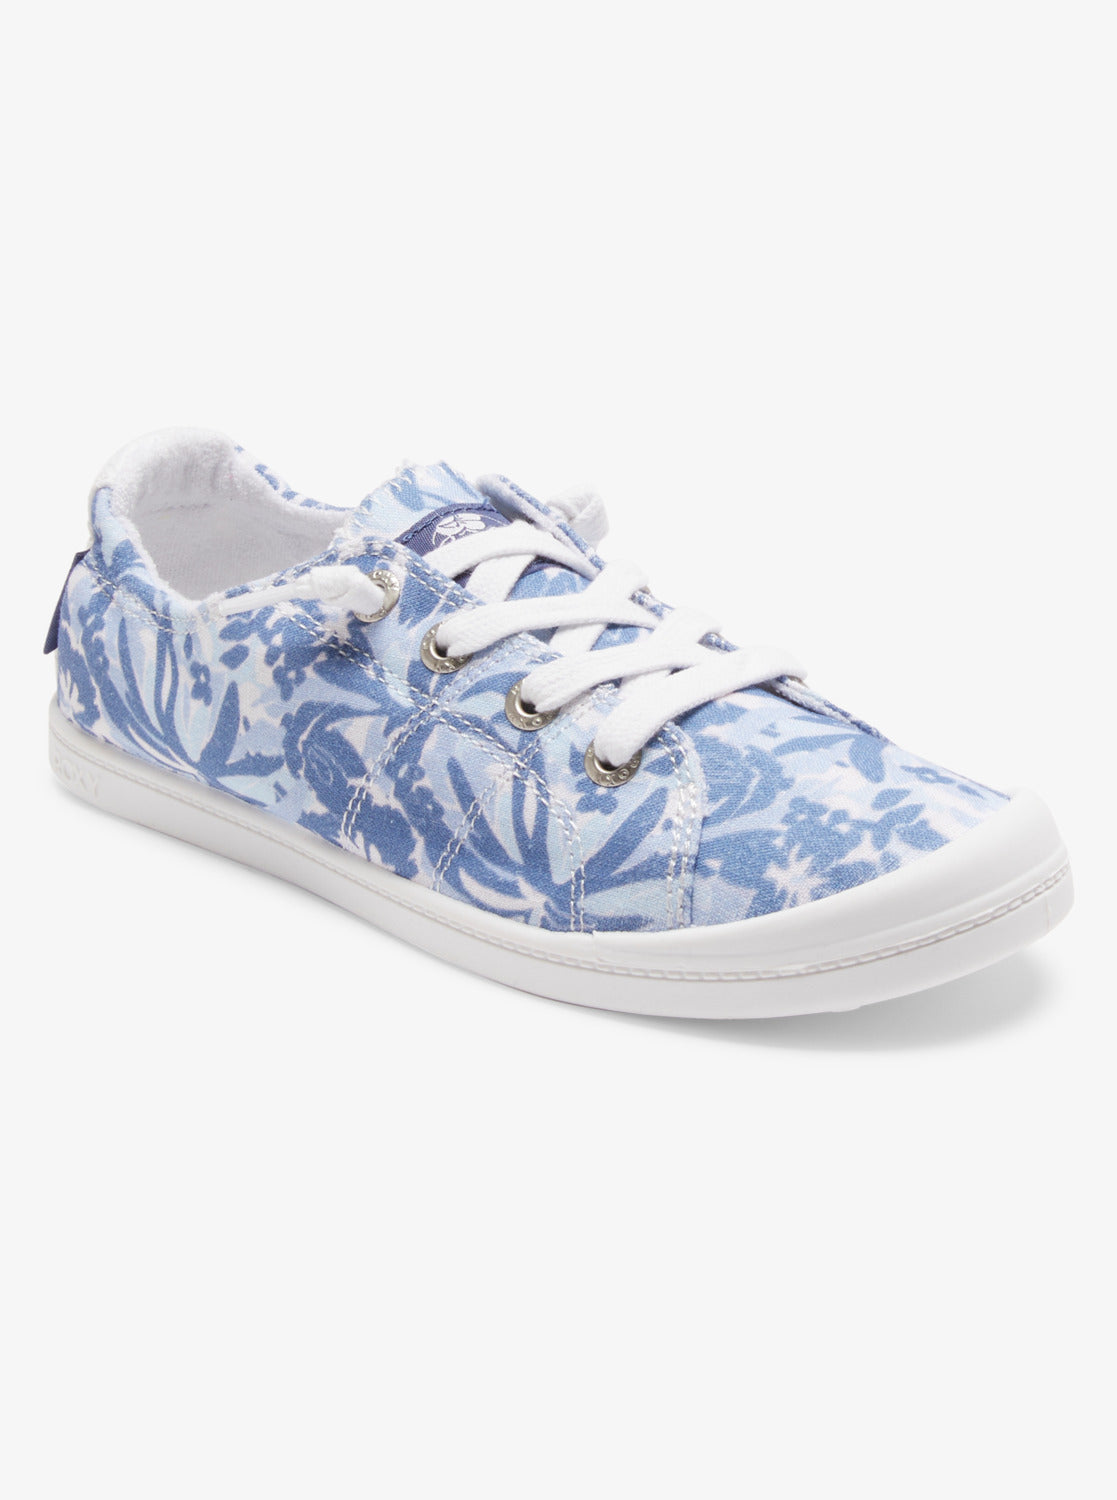 Bayshore Shoes - Blue/White